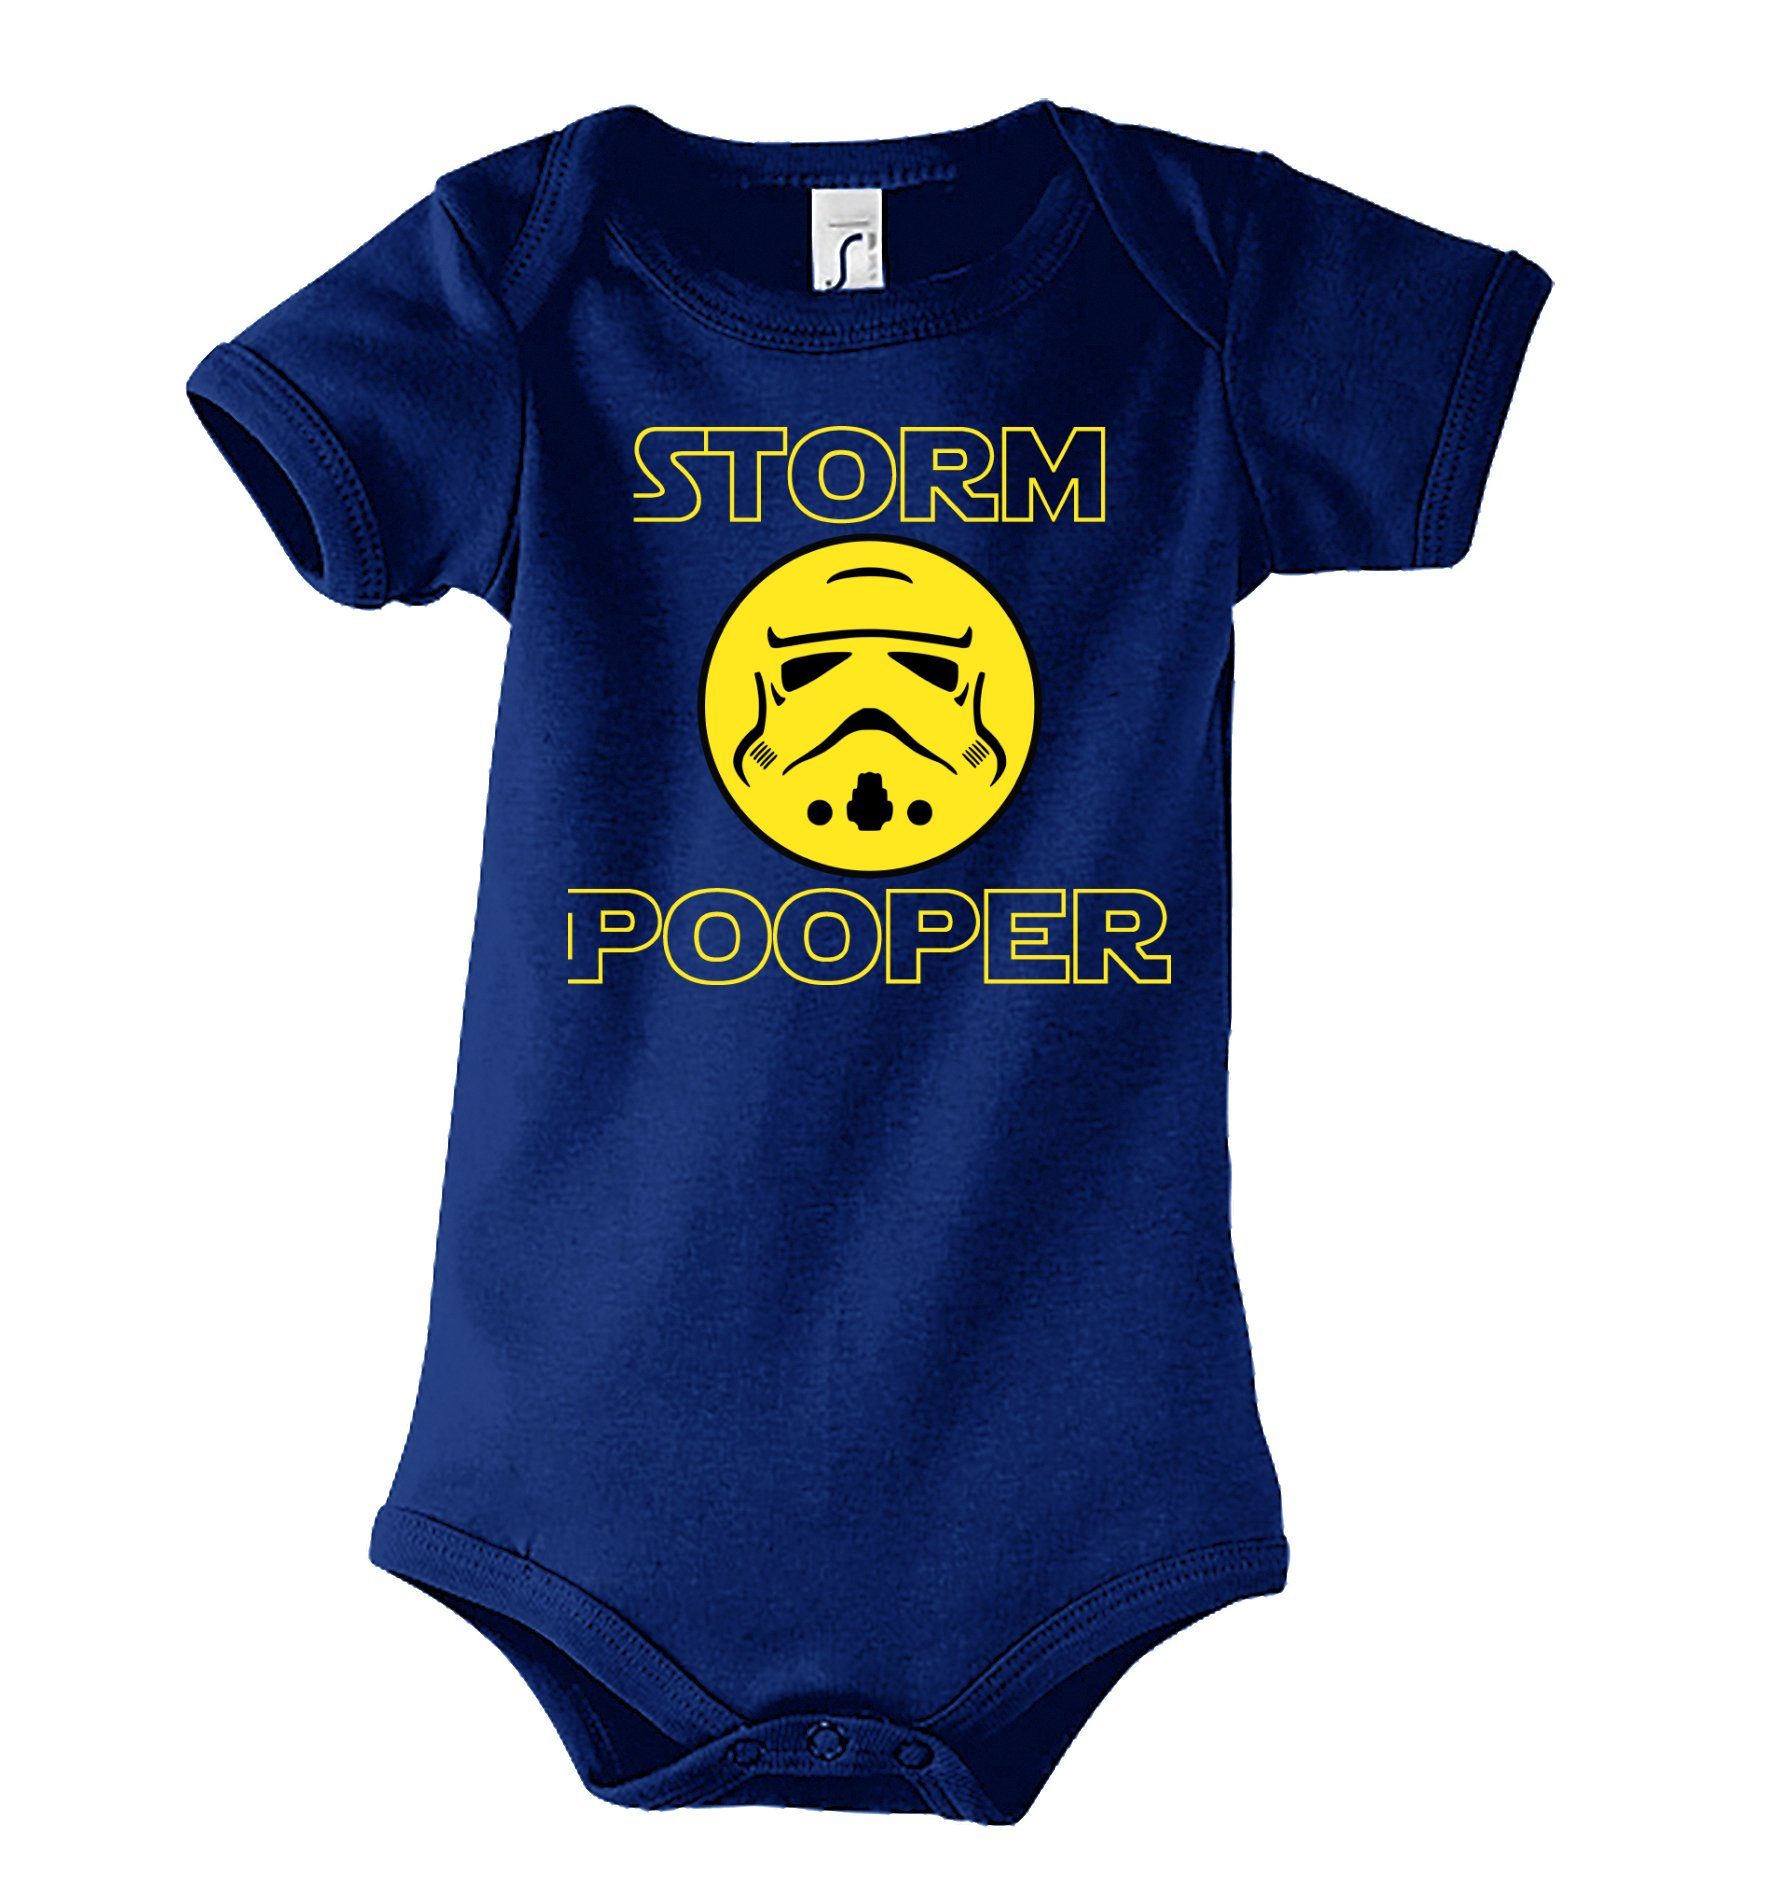 Youth Designz Kurzarmbody Storm Pooper mit & Strampler Logo Navyblau Body Spruch Print Kurzarm lustigem Baby Trooper